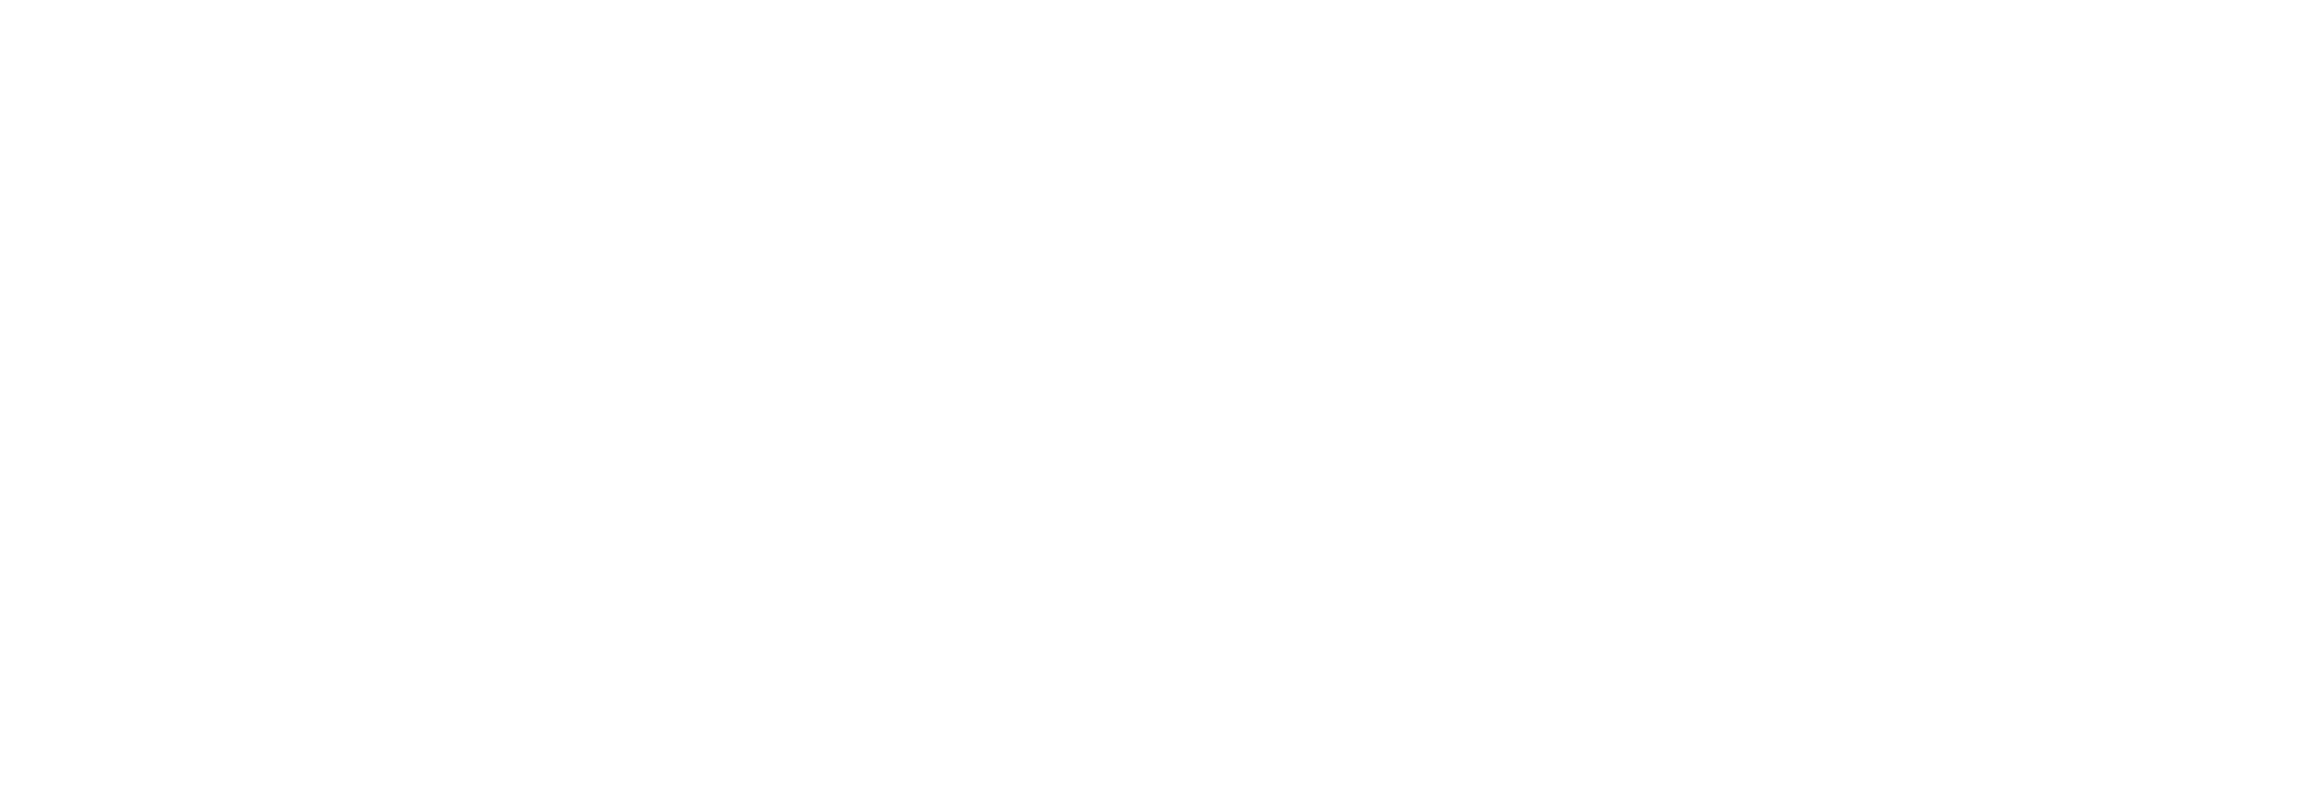 JORDAN CHANGED MY LIFE